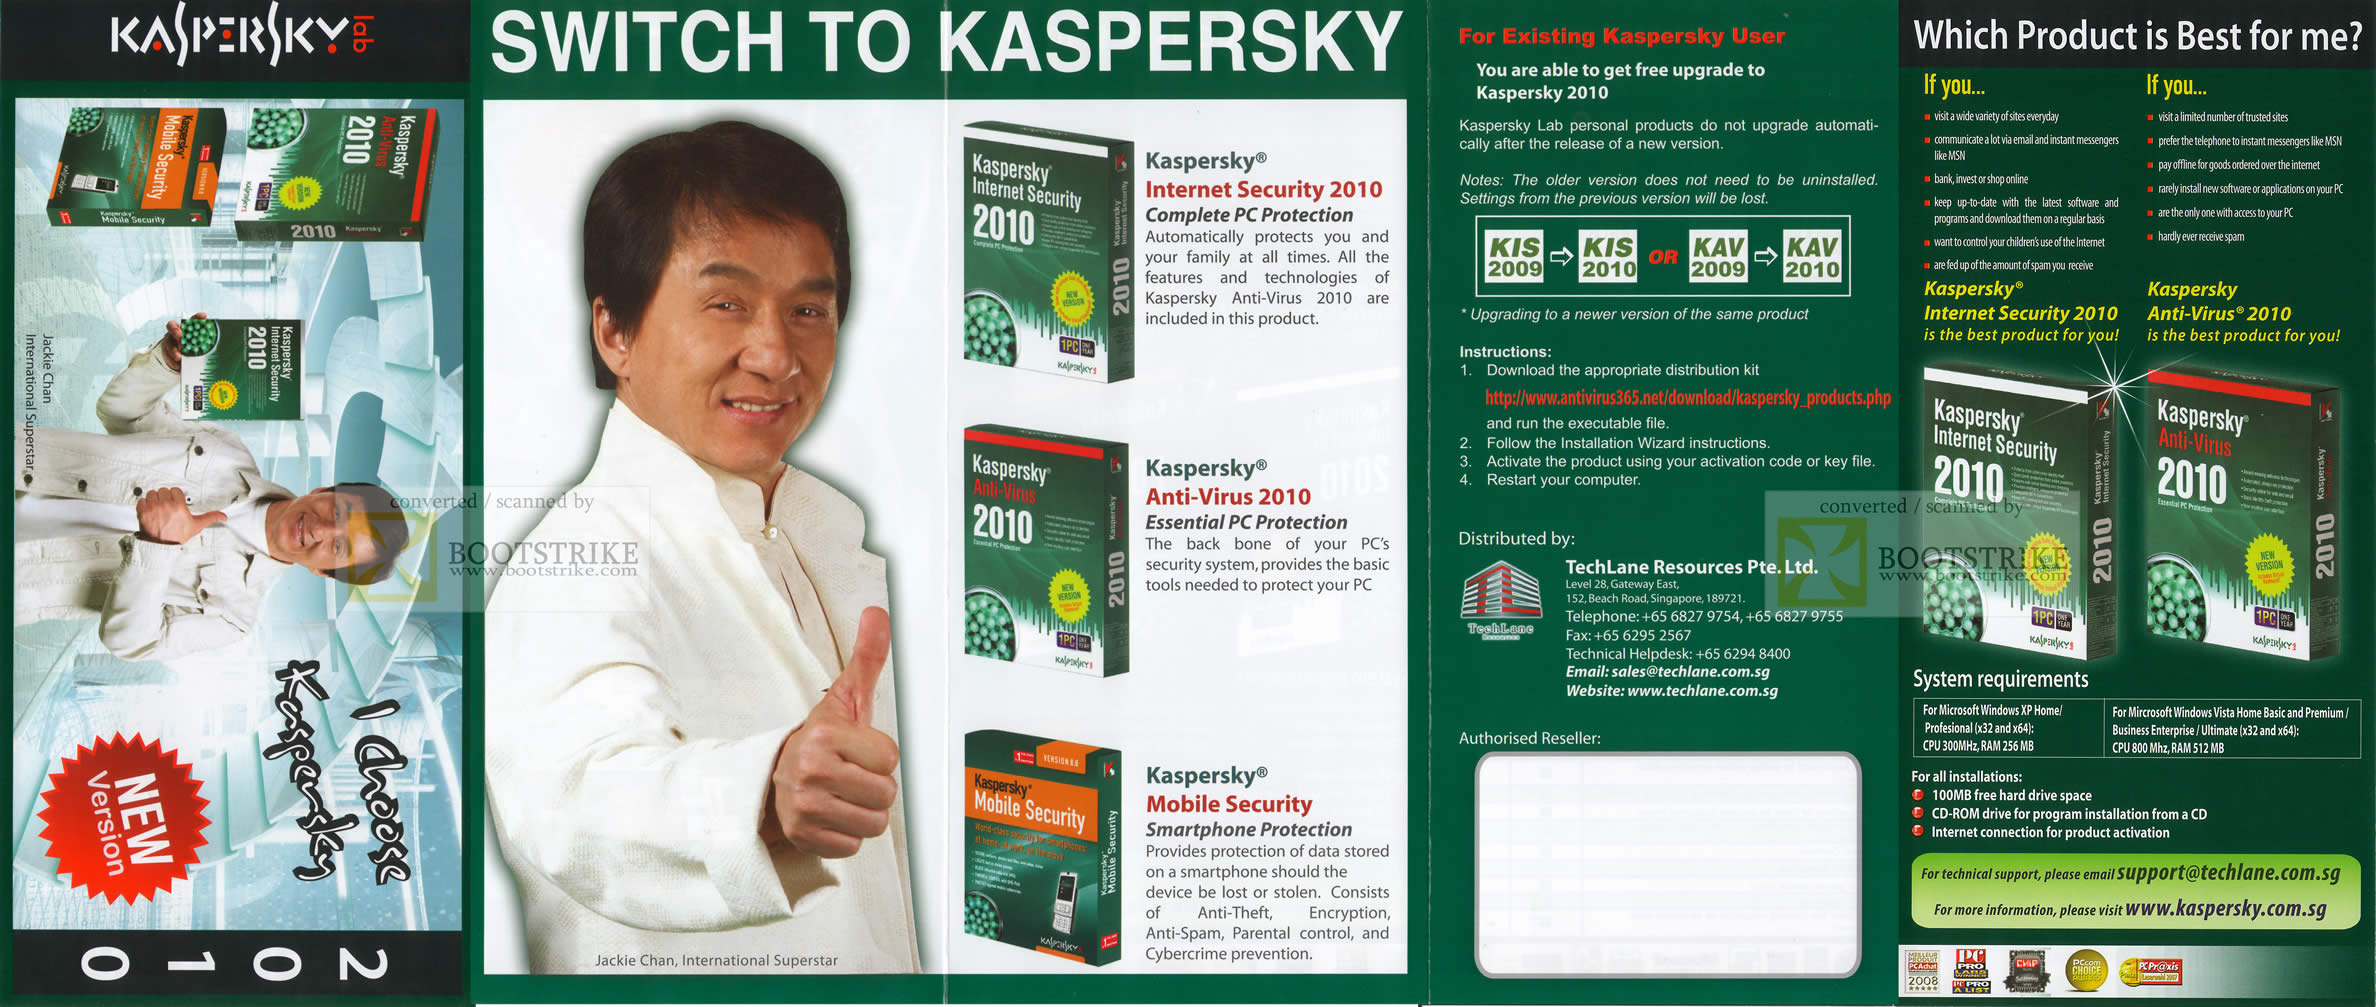 Sitex 2009 price list image brochure of Kaspersky 2010 Internet Security 2010 Anti Virus Mobile Security